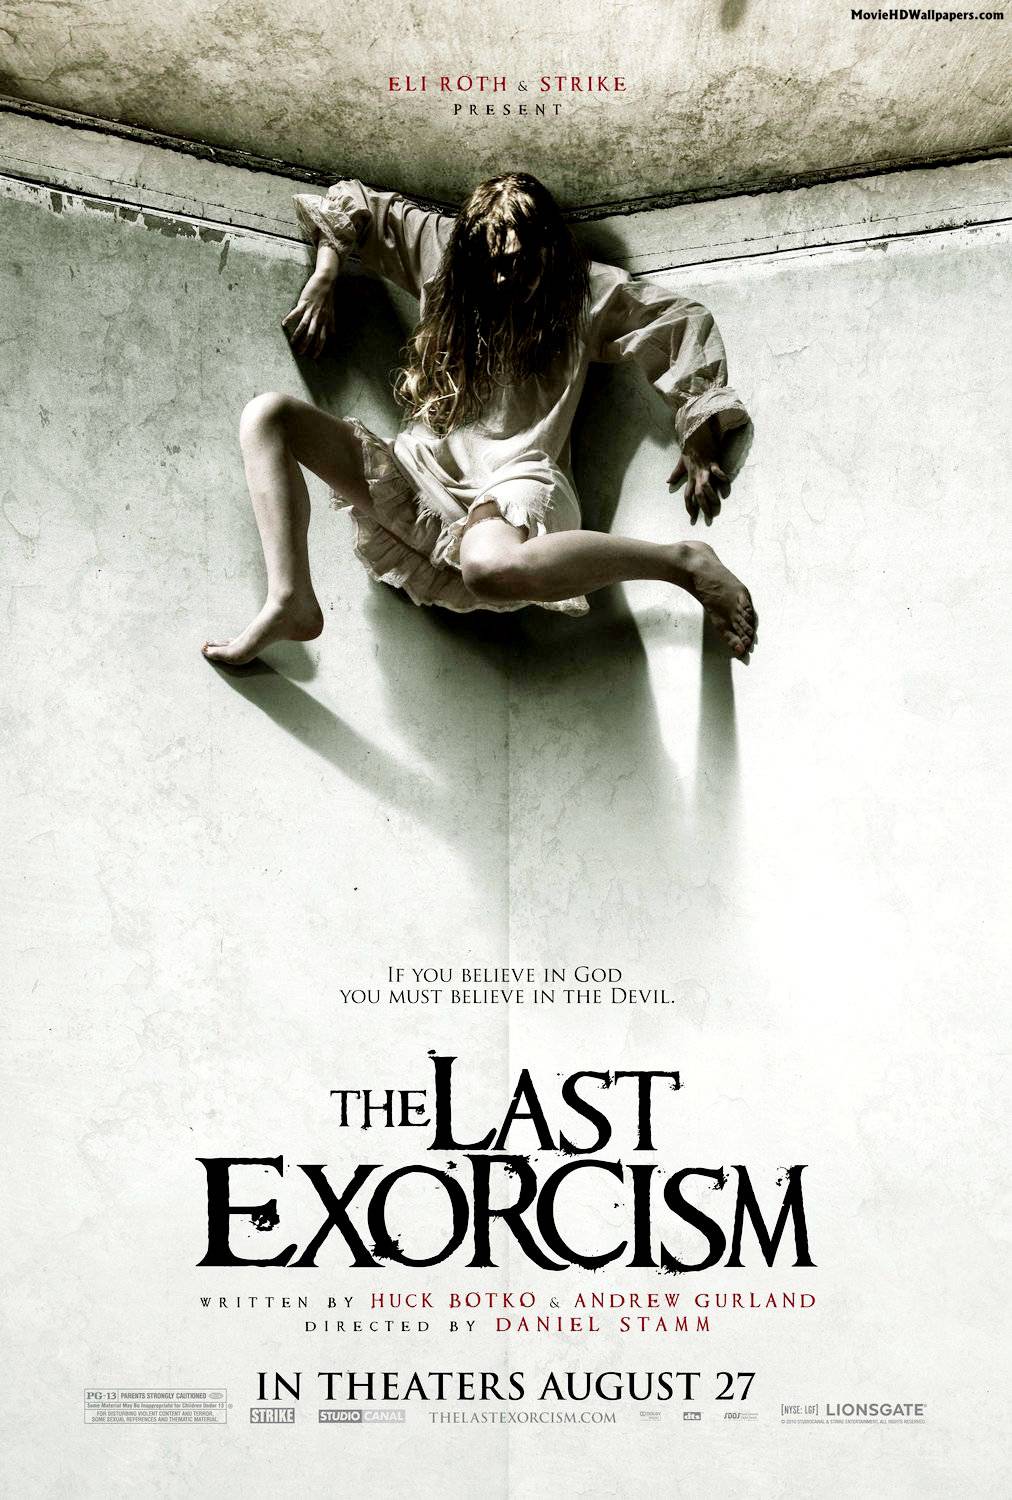 The Last Exorcism Part II Backgrounds, Compatible - PC, Mobile, Gadgets| 1012x1500 px